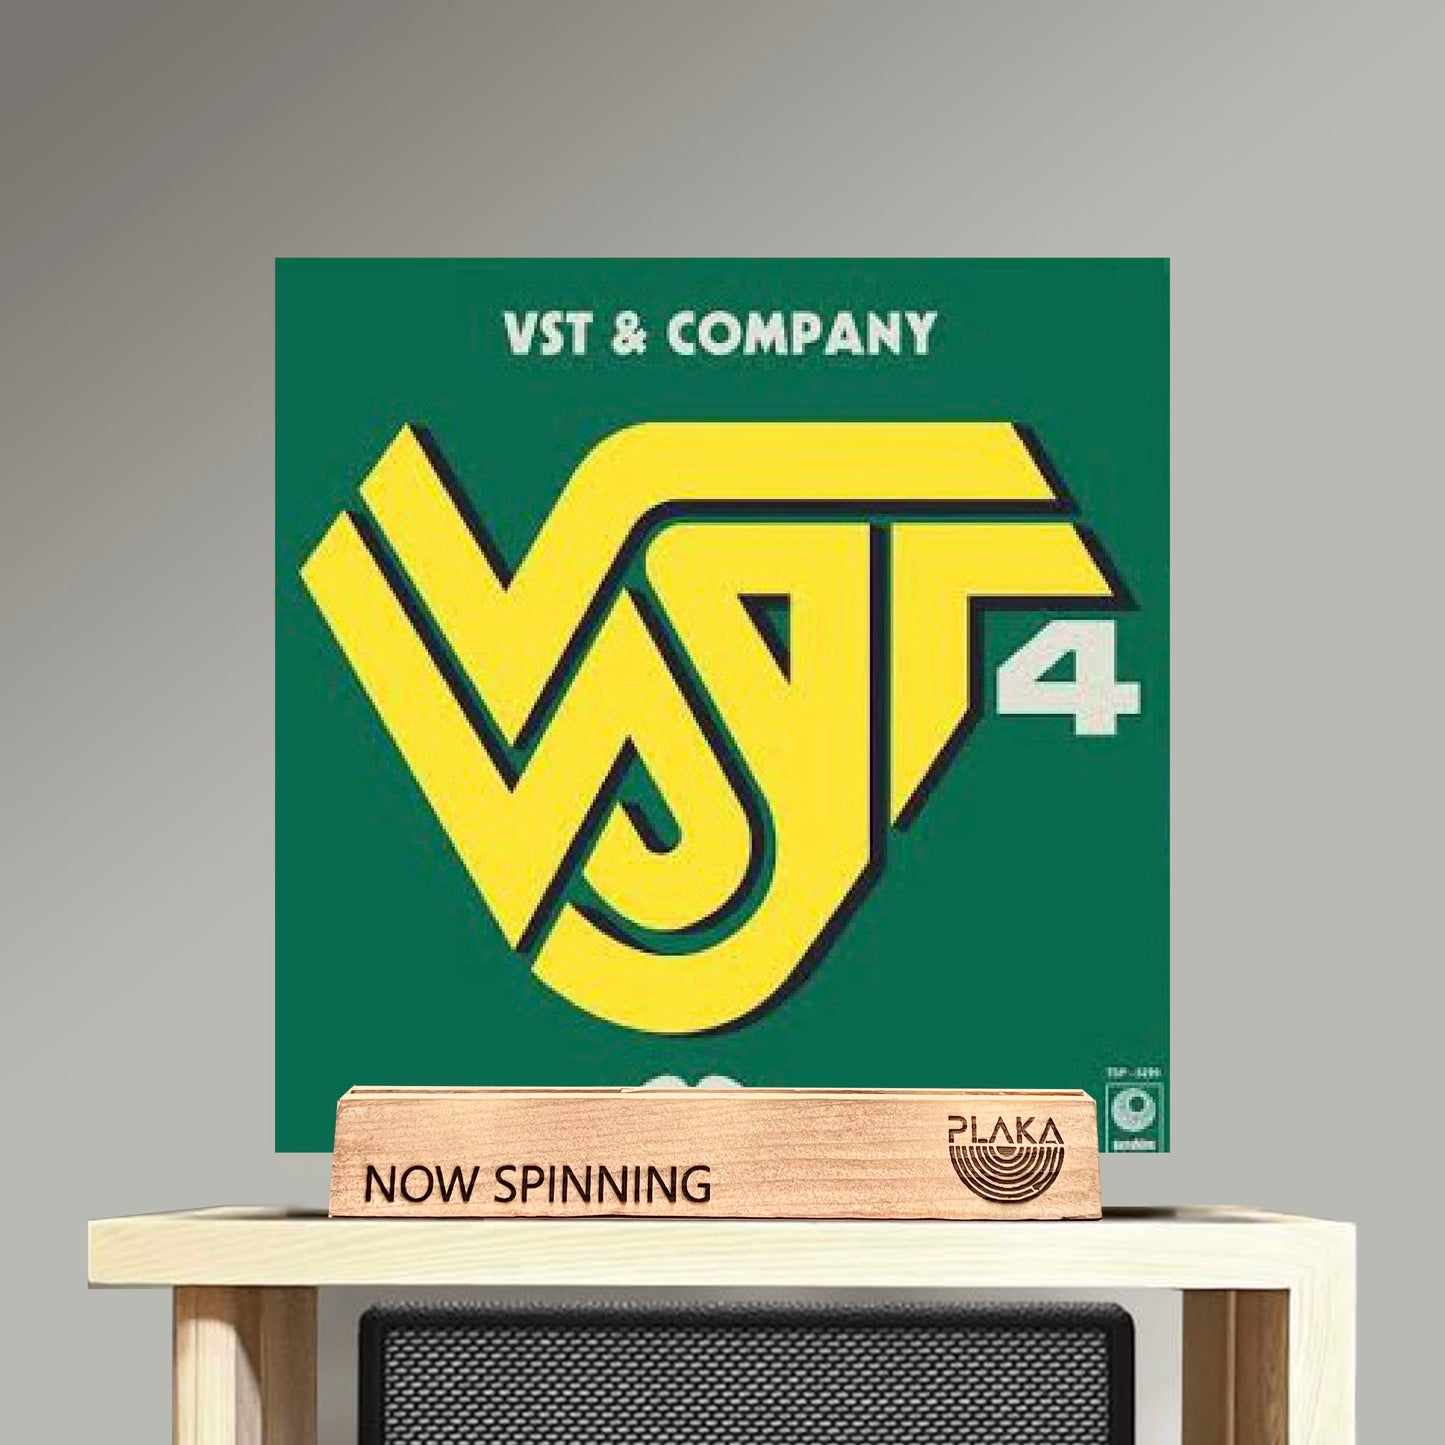 Vst & Co. - VST 4